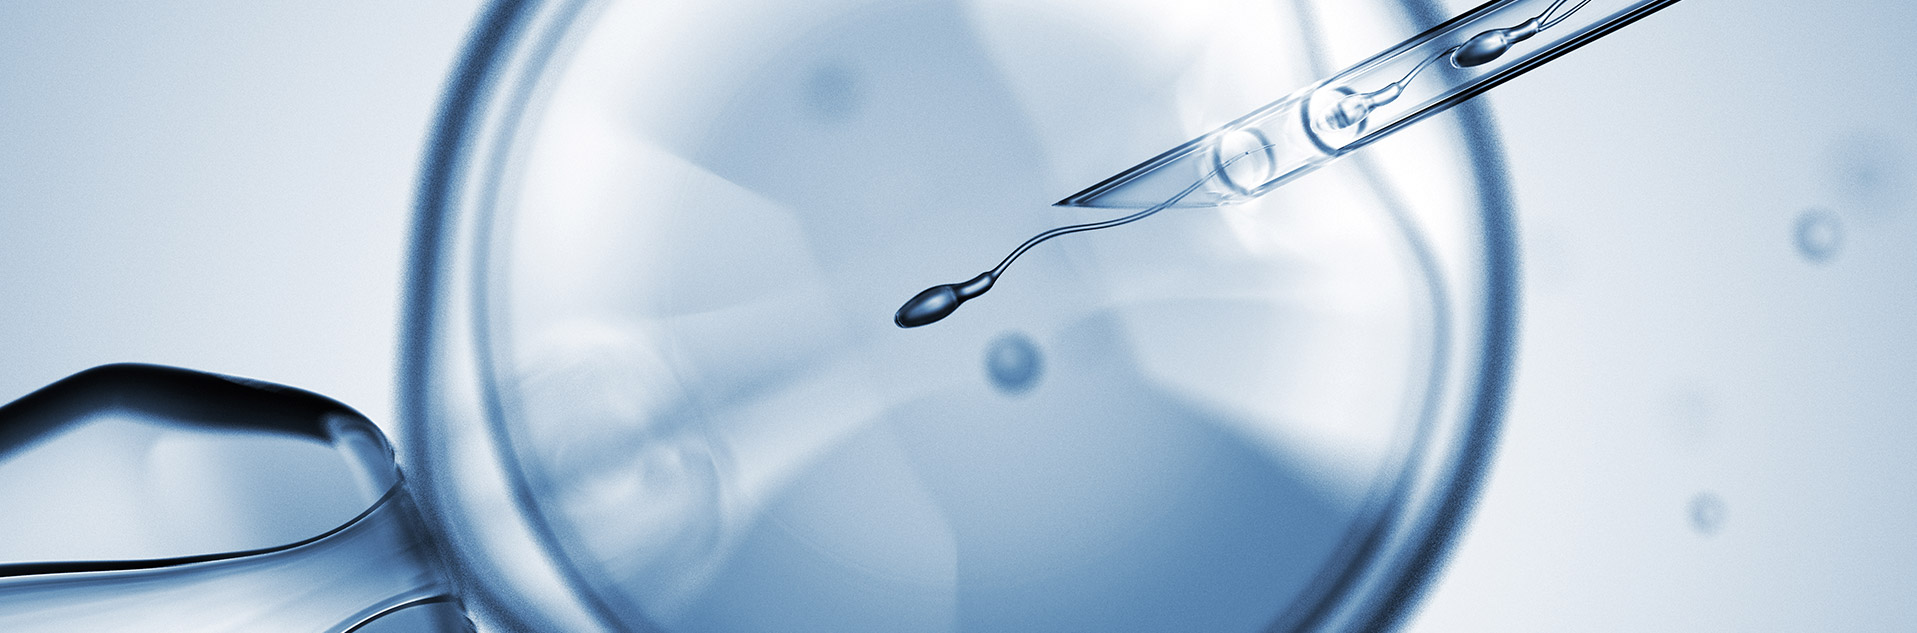 sperm injected into egg as seen through a microscope